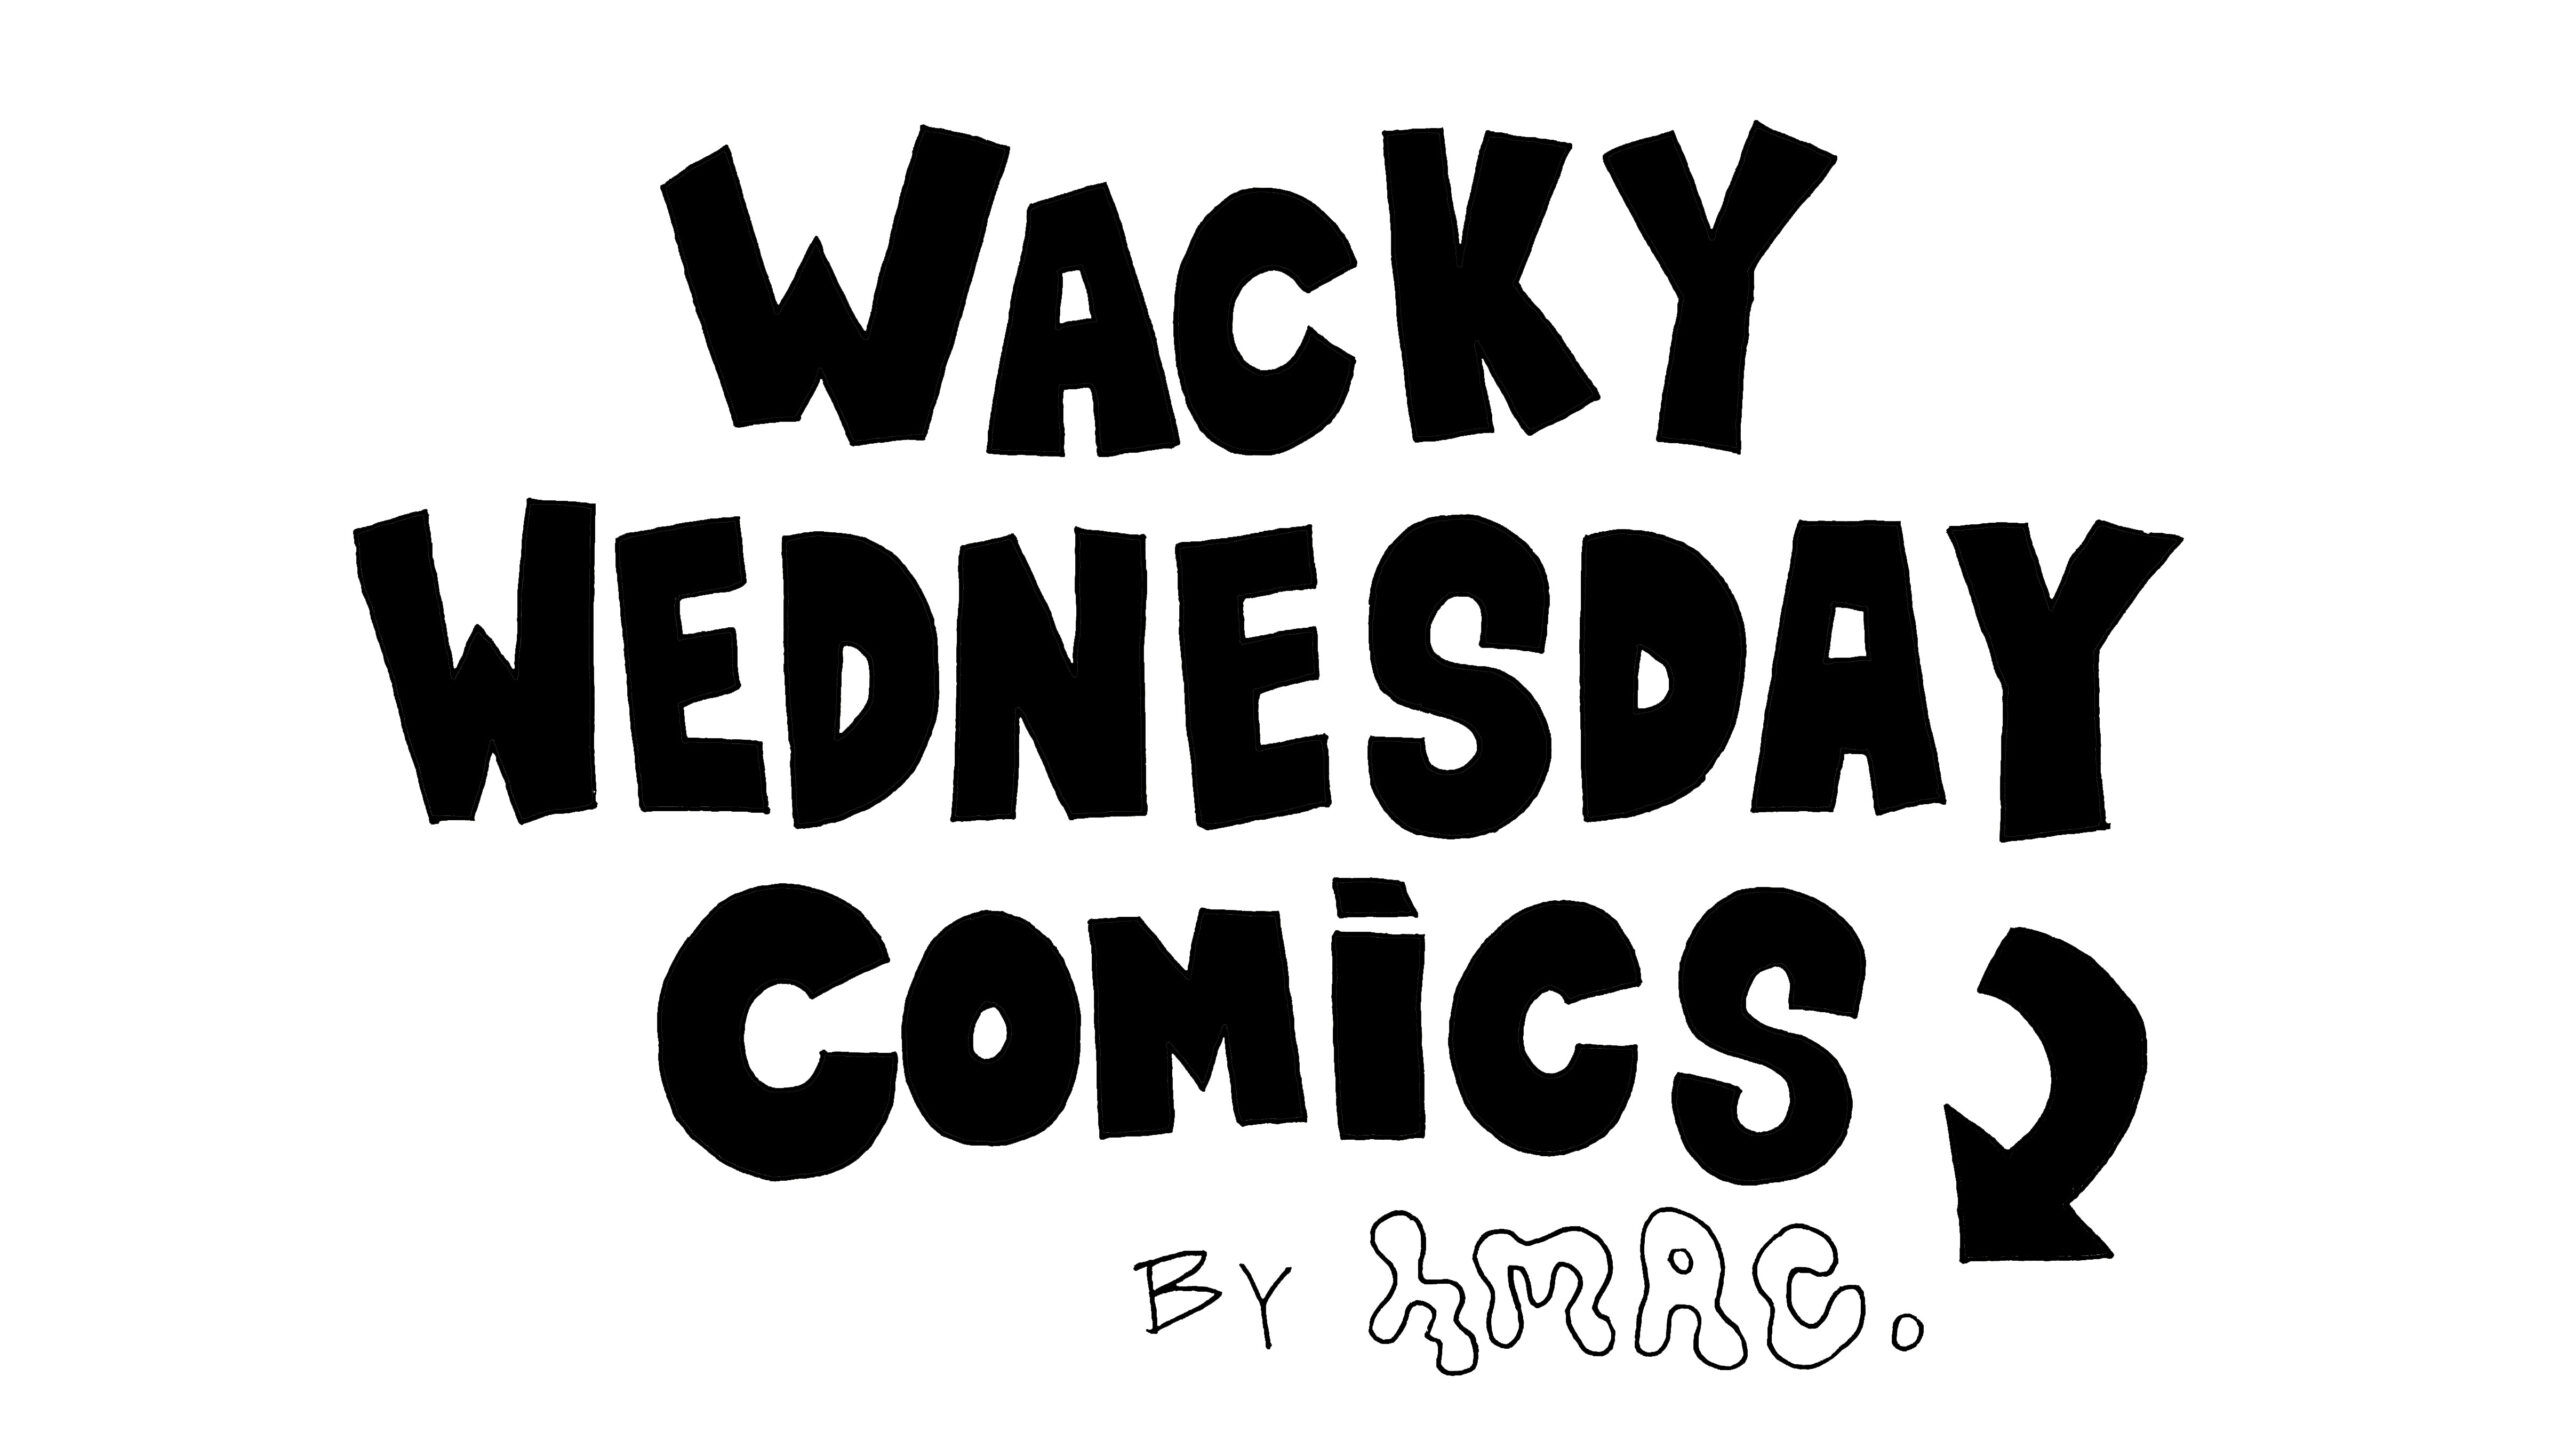 Text reads Wacky Wednesday Comics by HMAC